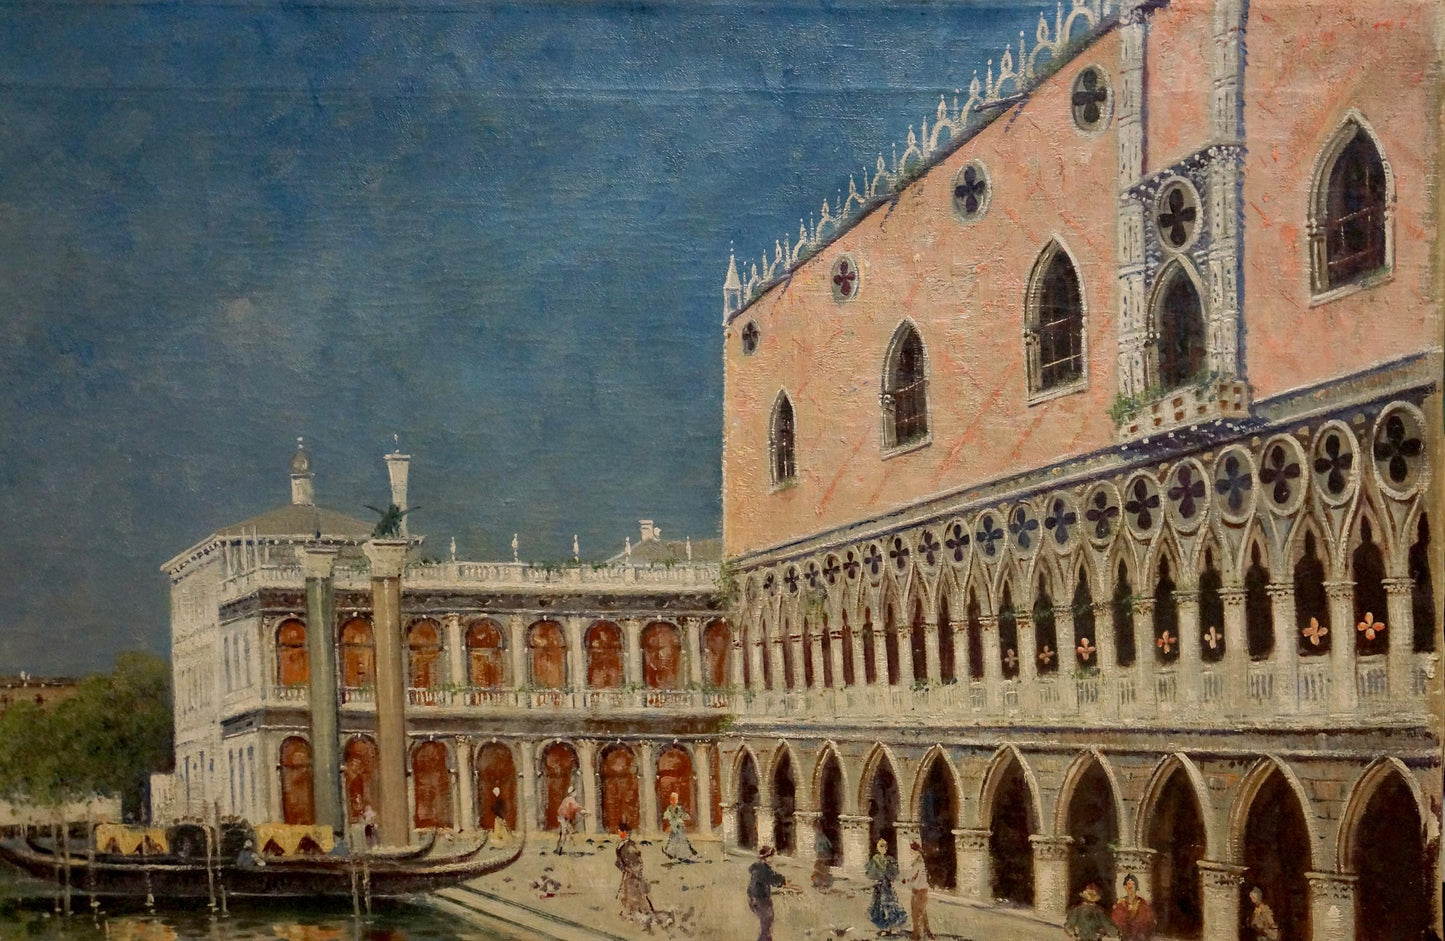 Oil painting Venice